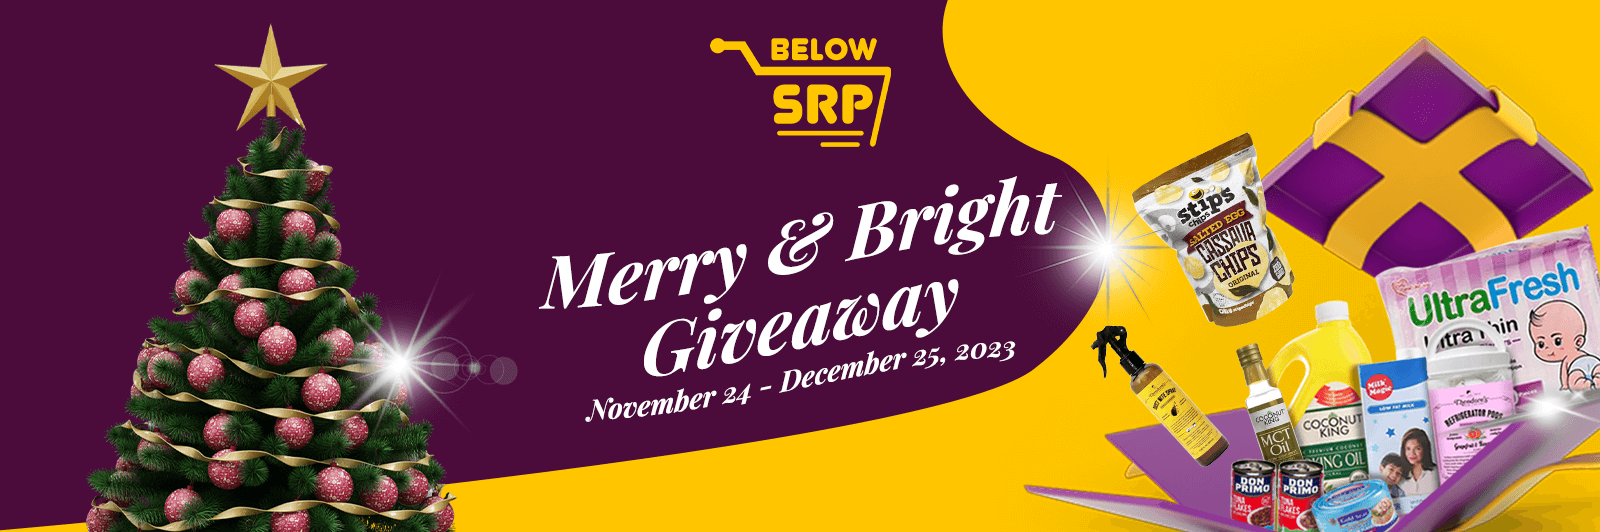 Below SRP Merry & Bright Giveaway